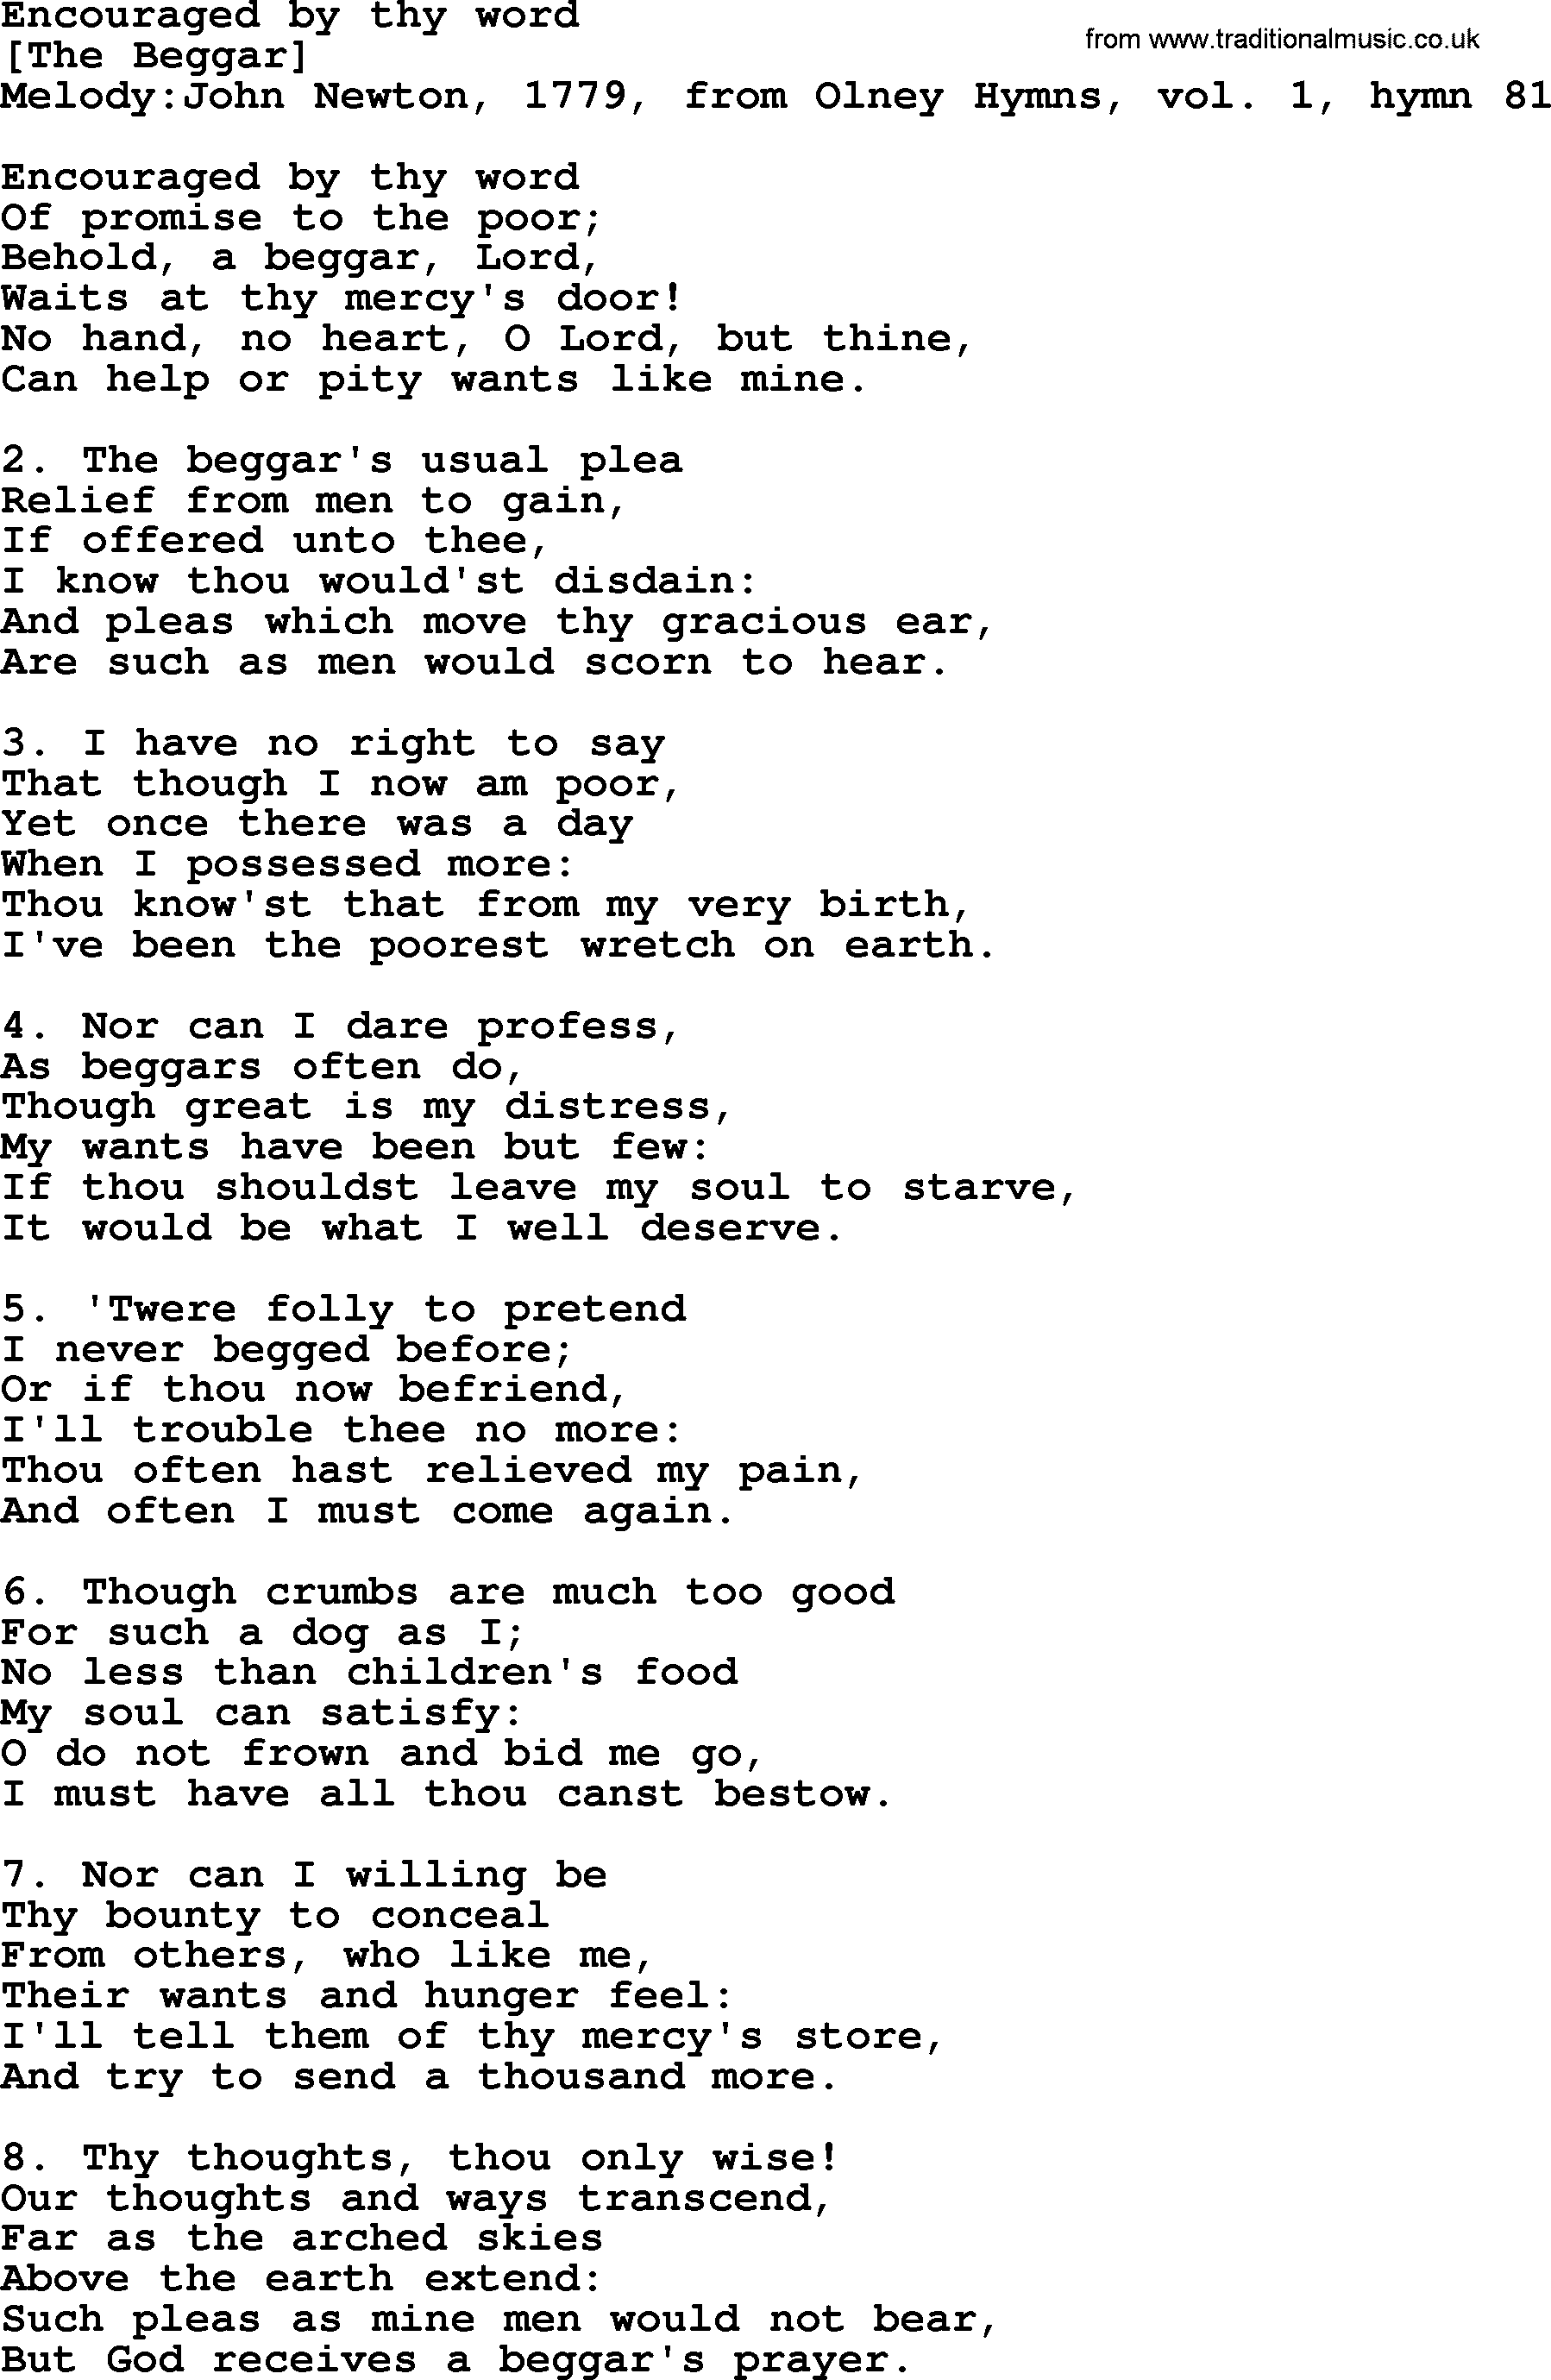 Old English Song: Encouraged By Thy Word lyrics